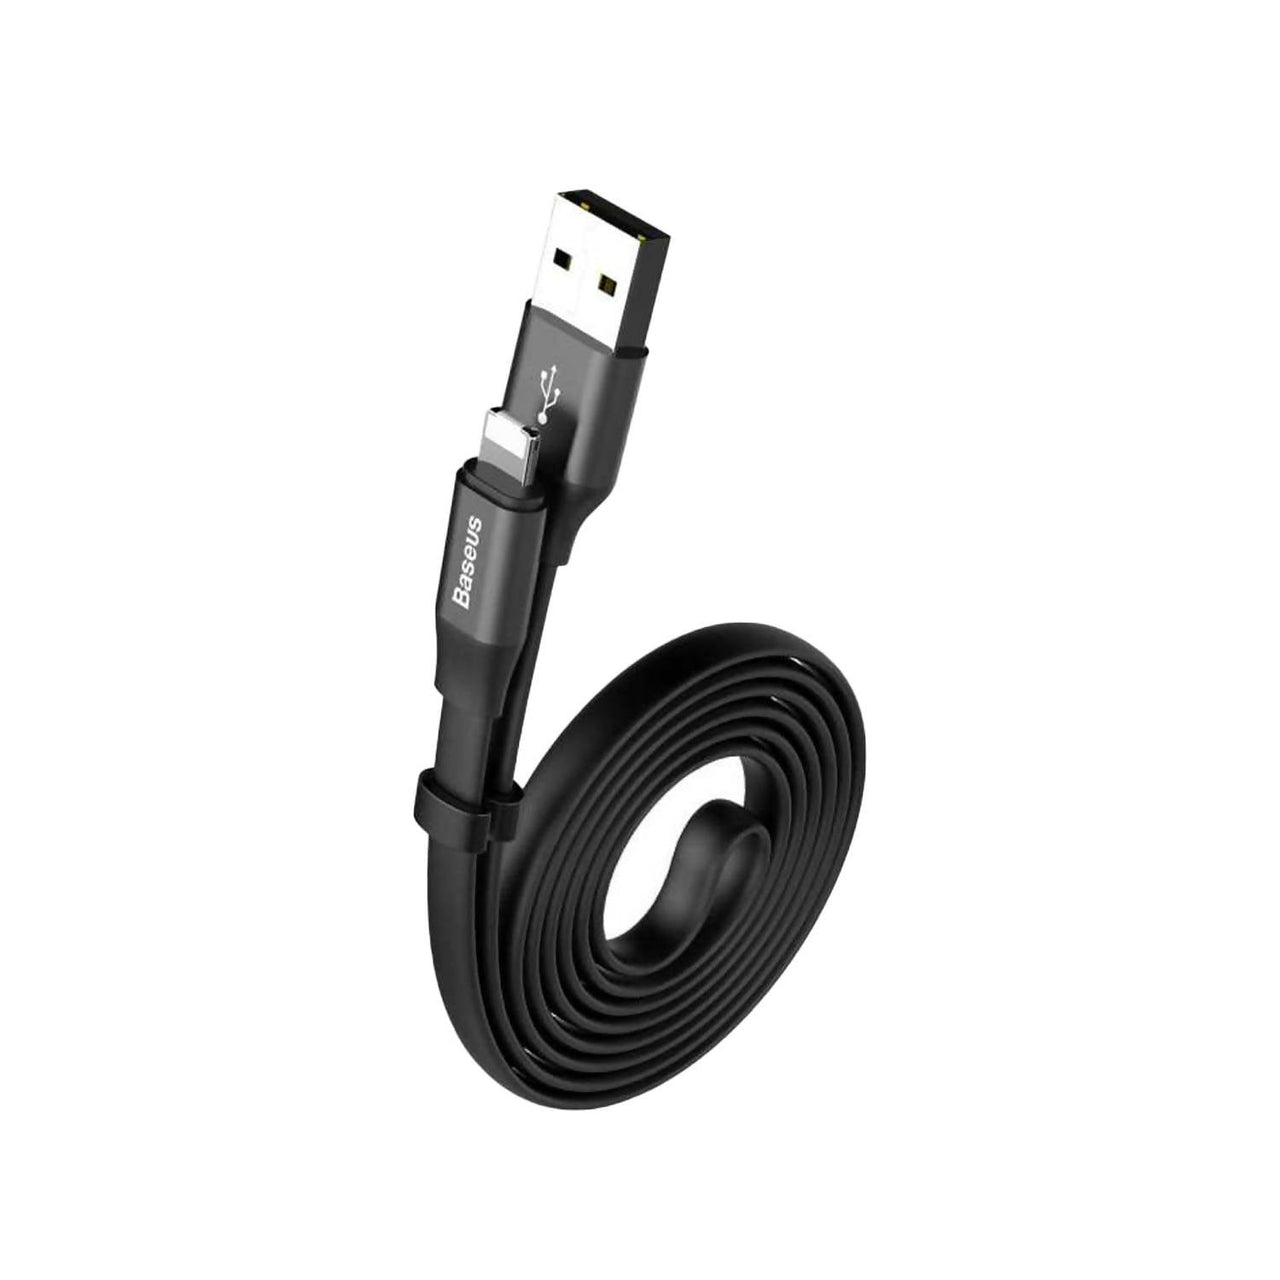 Baseus Portable USB-A to Lightning Cable 23cm Short cord - Black